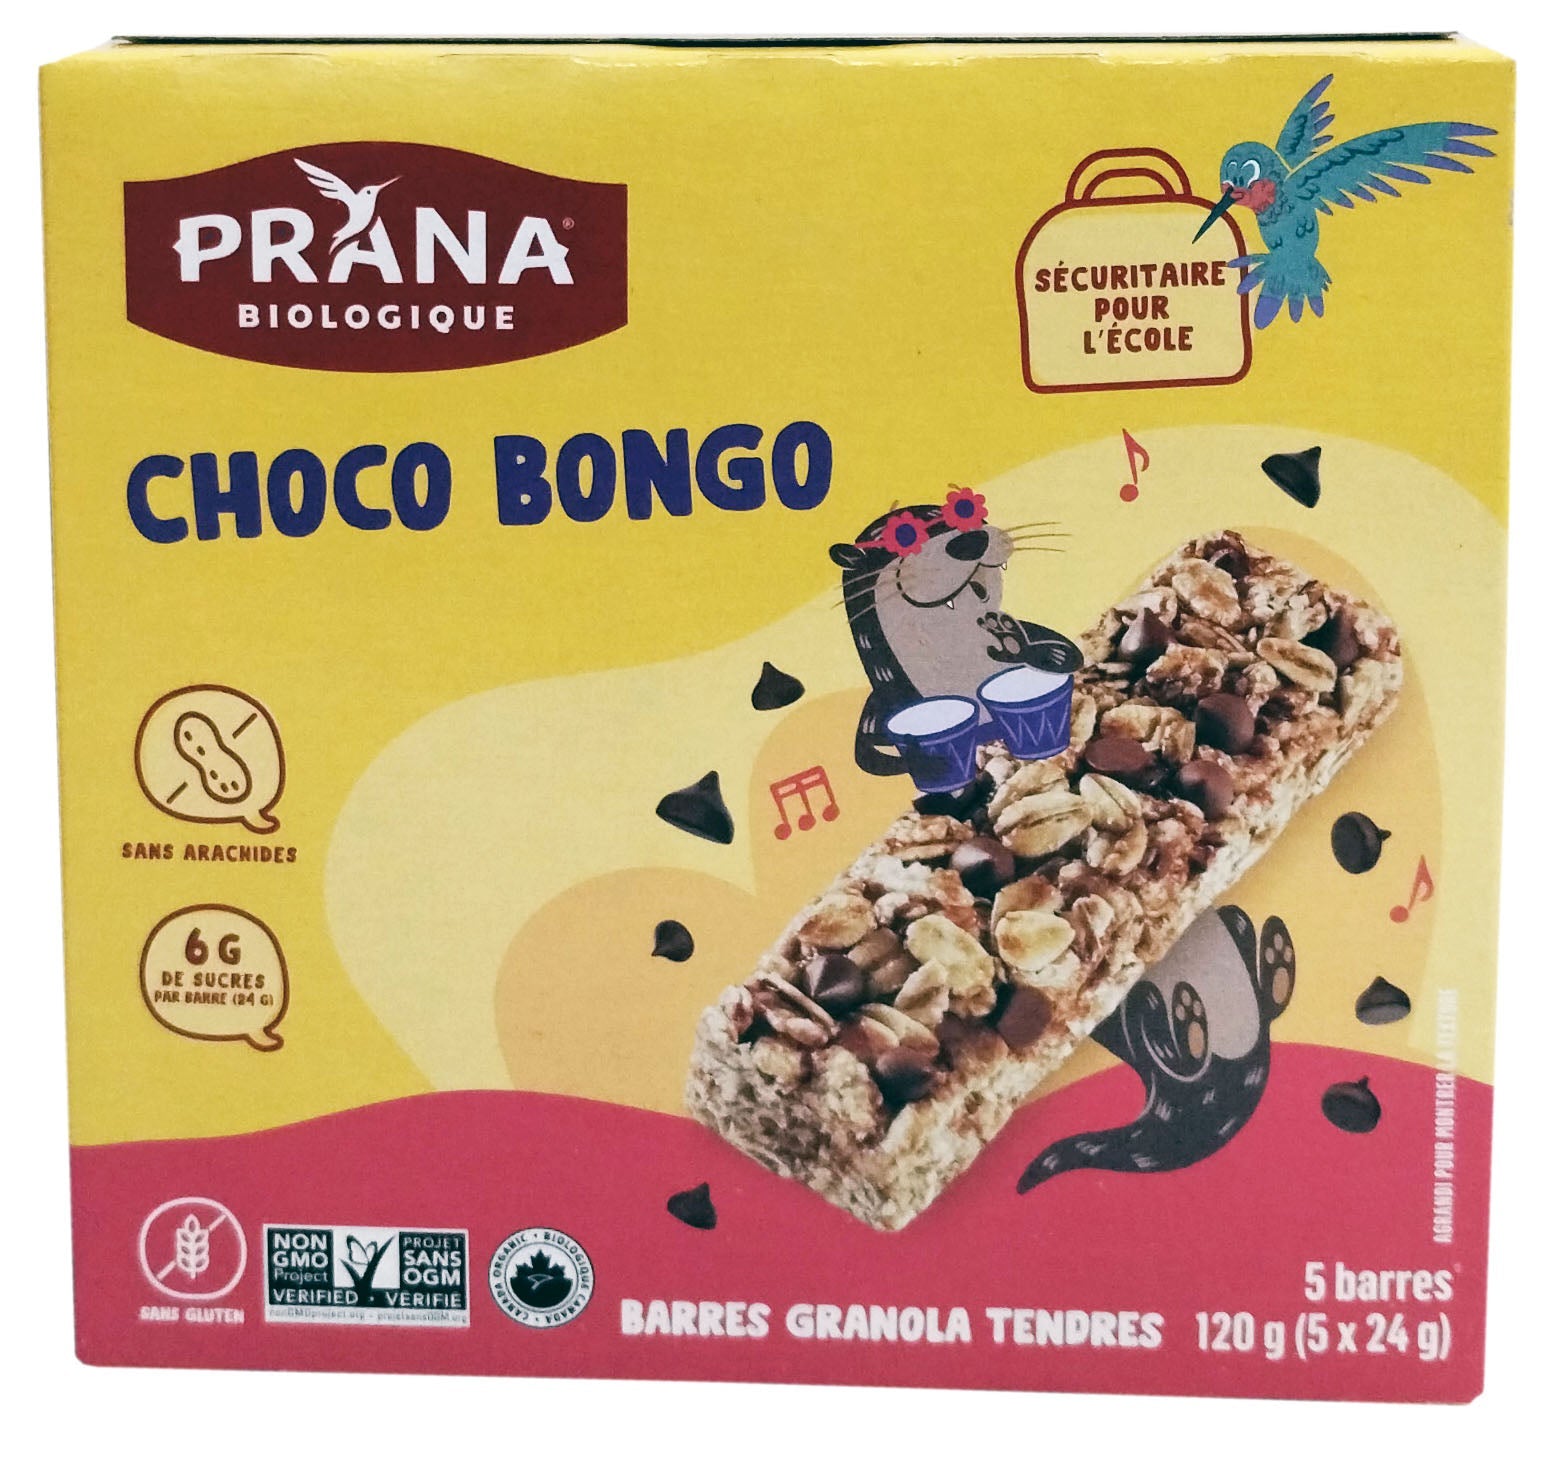 Barres tendres granola choco bongo bio 5x24g